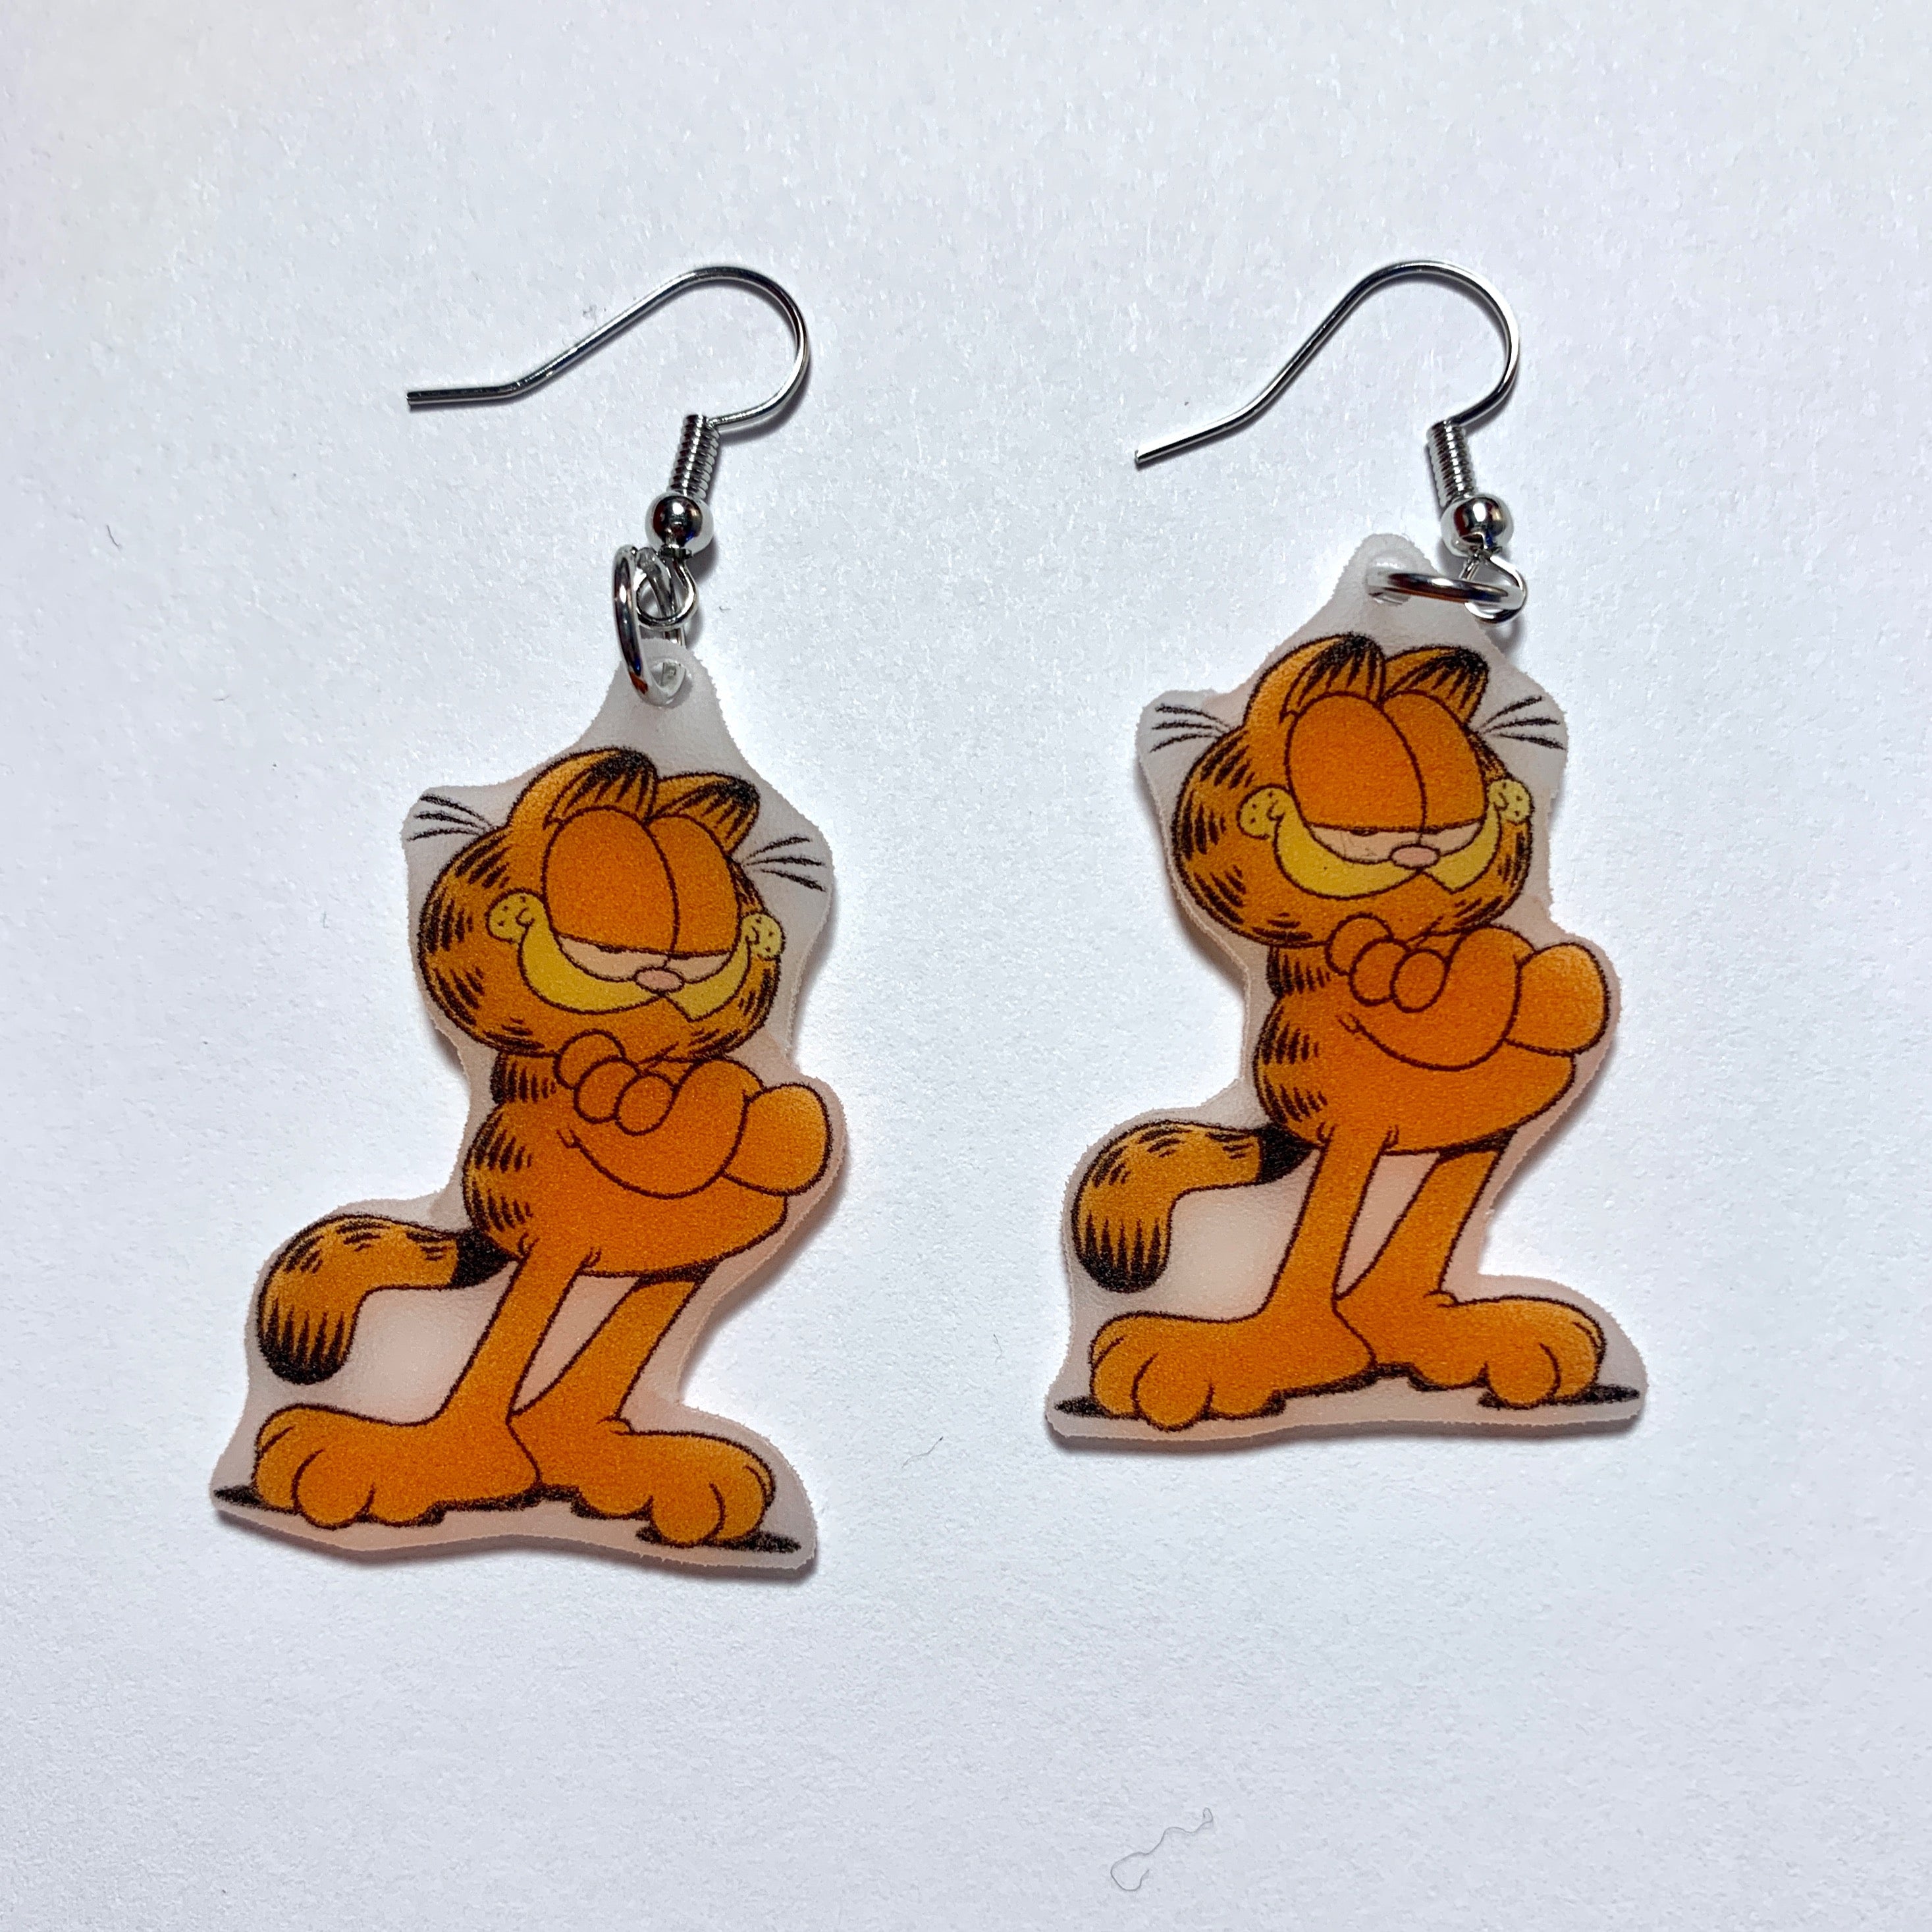 Garfield Character Handmade Earrings!